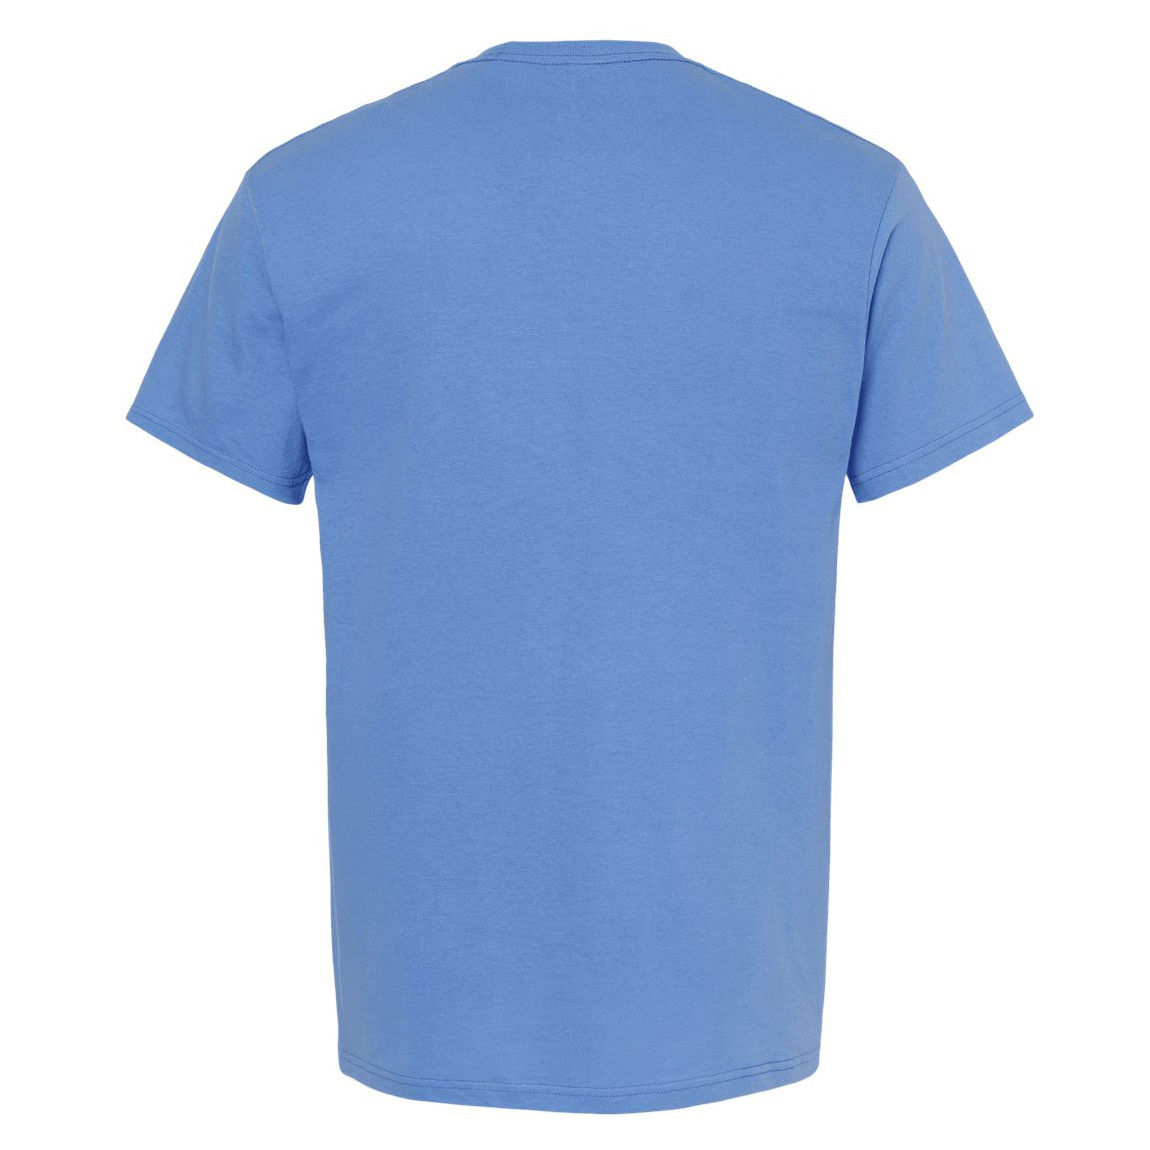 M&O 4800 Gold Soft Touch T-Shirt - Carolina Blue